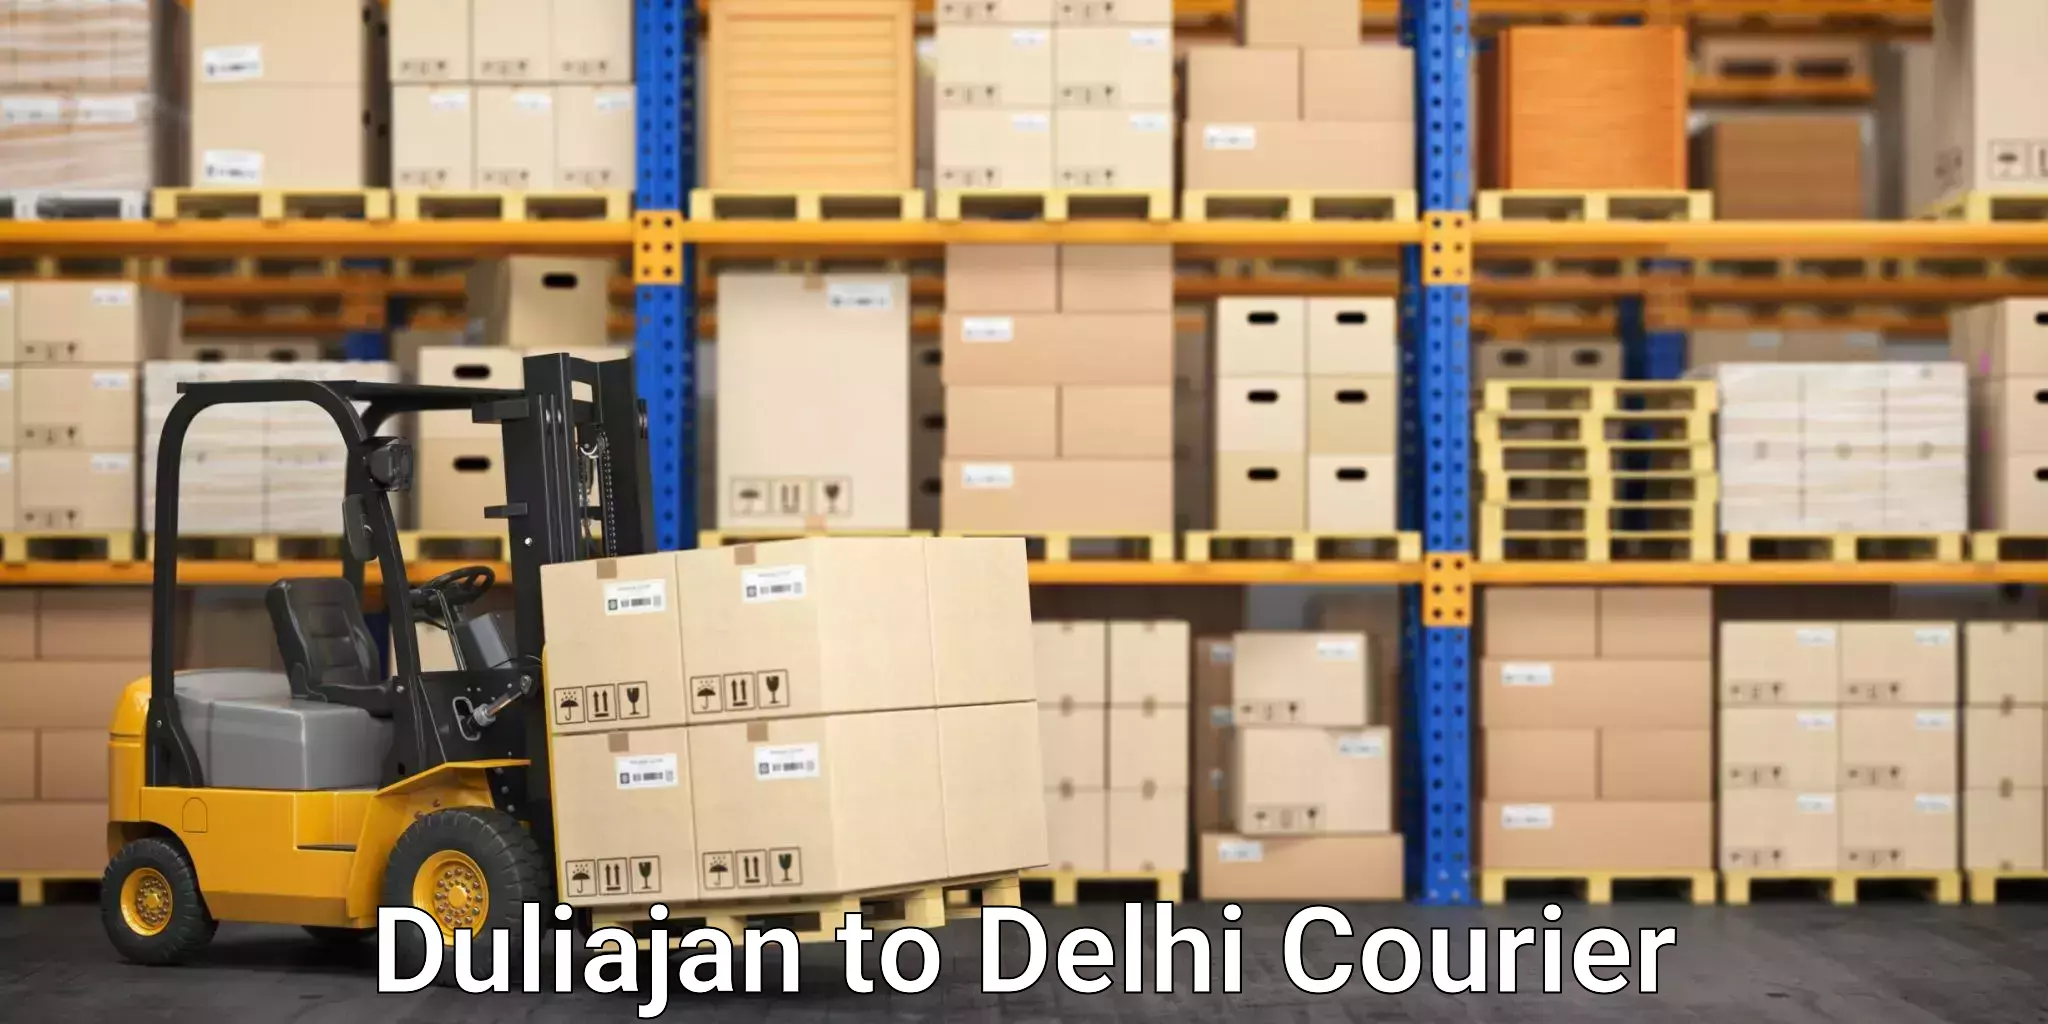 User-friendly courier app Duliajan to Delhi